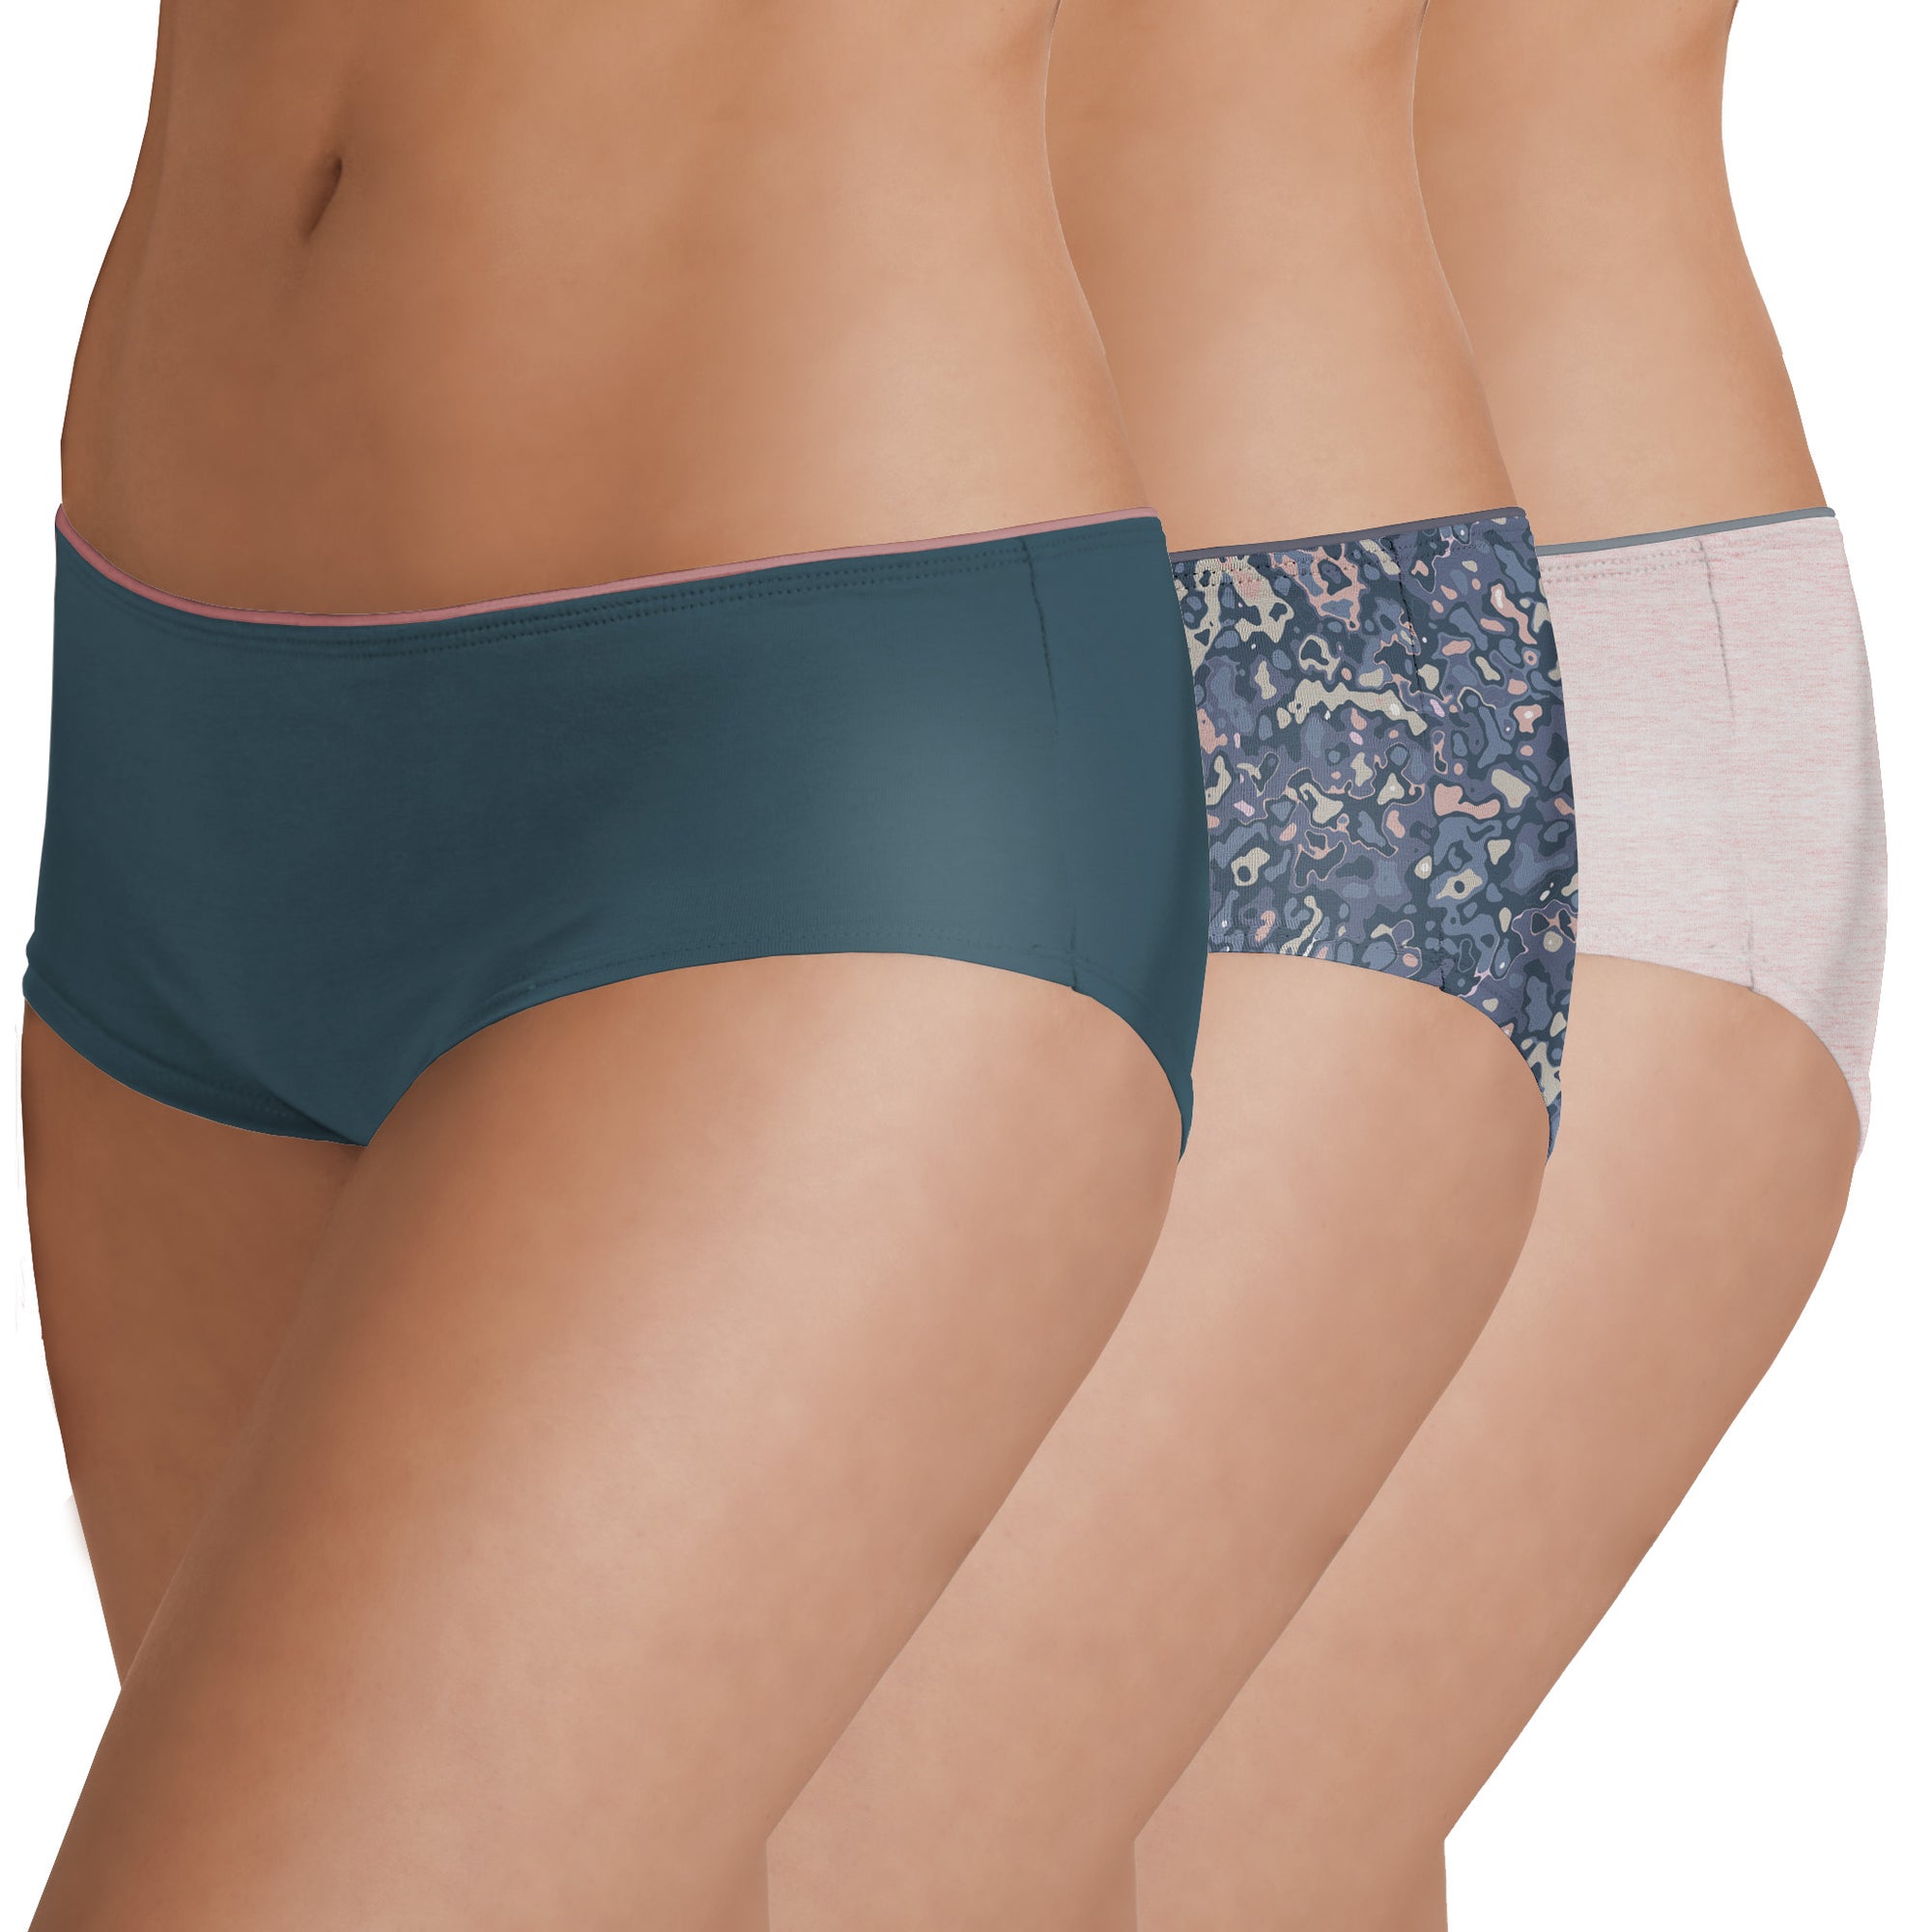 Bóxer Medio Algodón MUJER Pack 3 PlayList Tropical Splash 🎵 - Top Underwear